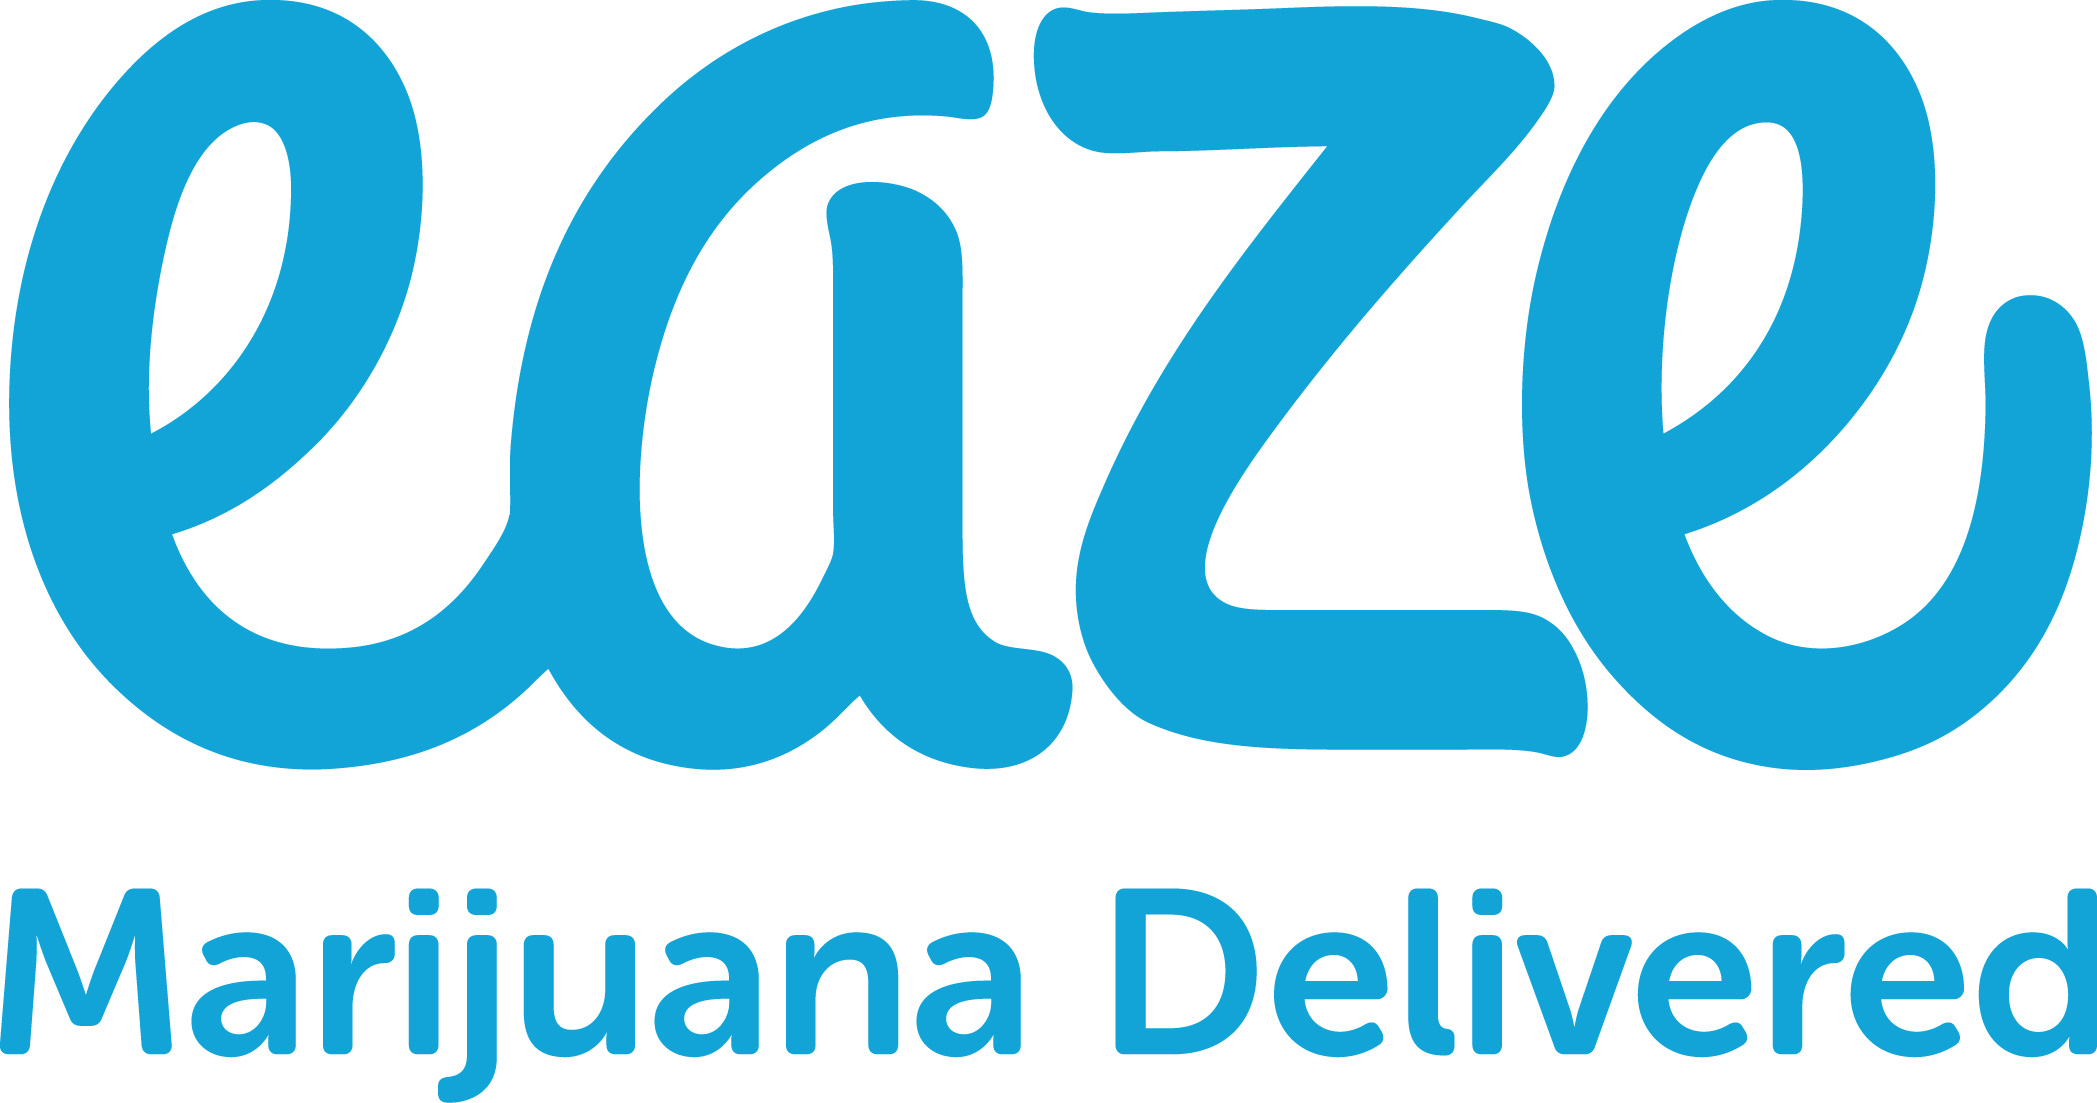 Eaze's Delivery Deals